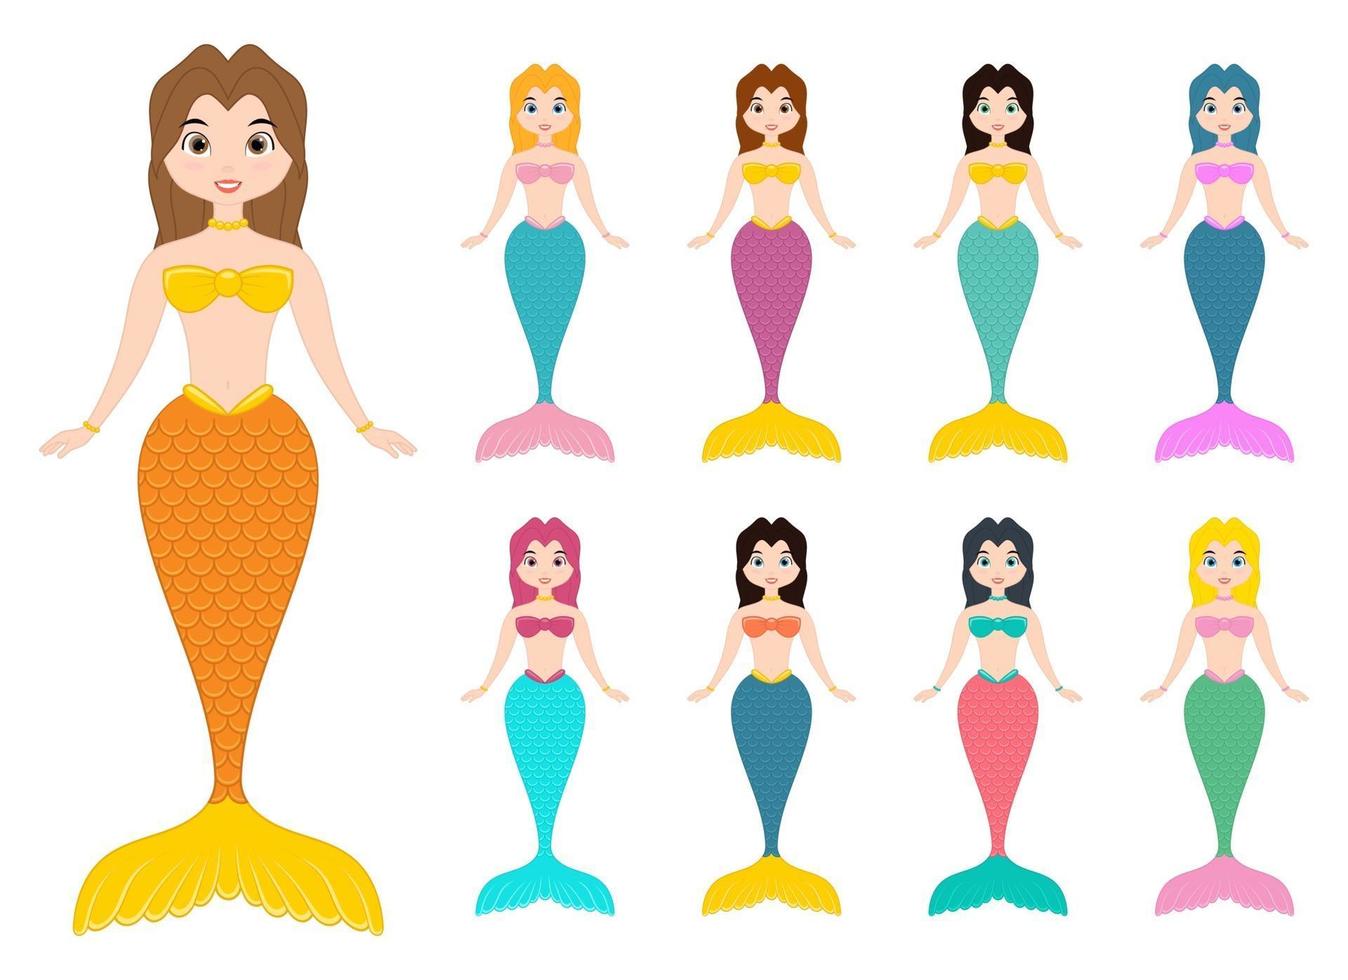 Mermaid vector design illustration isolated on white background